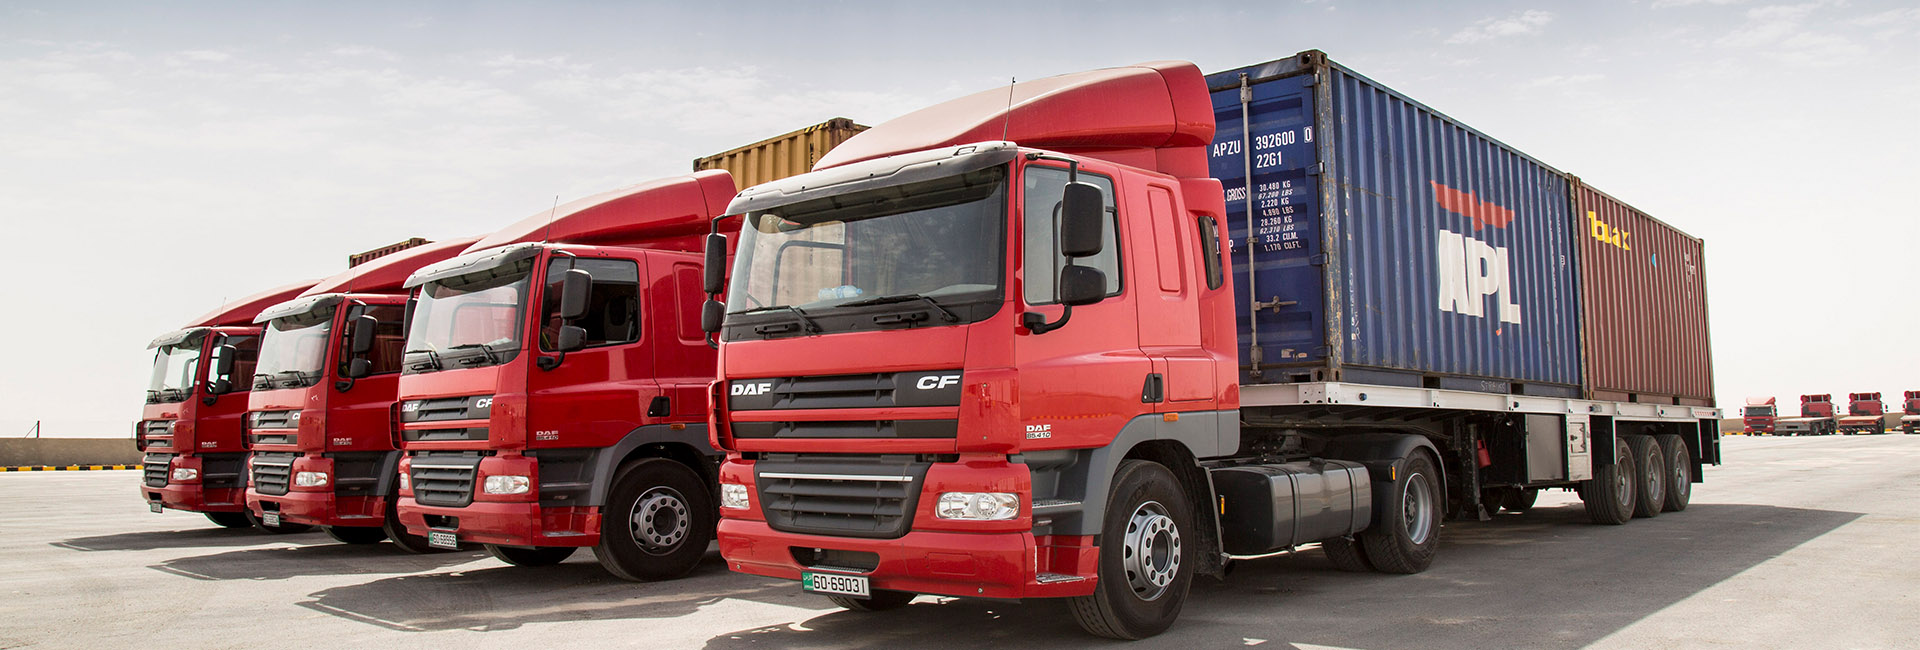 DAF delivers 500th truck to Jordan